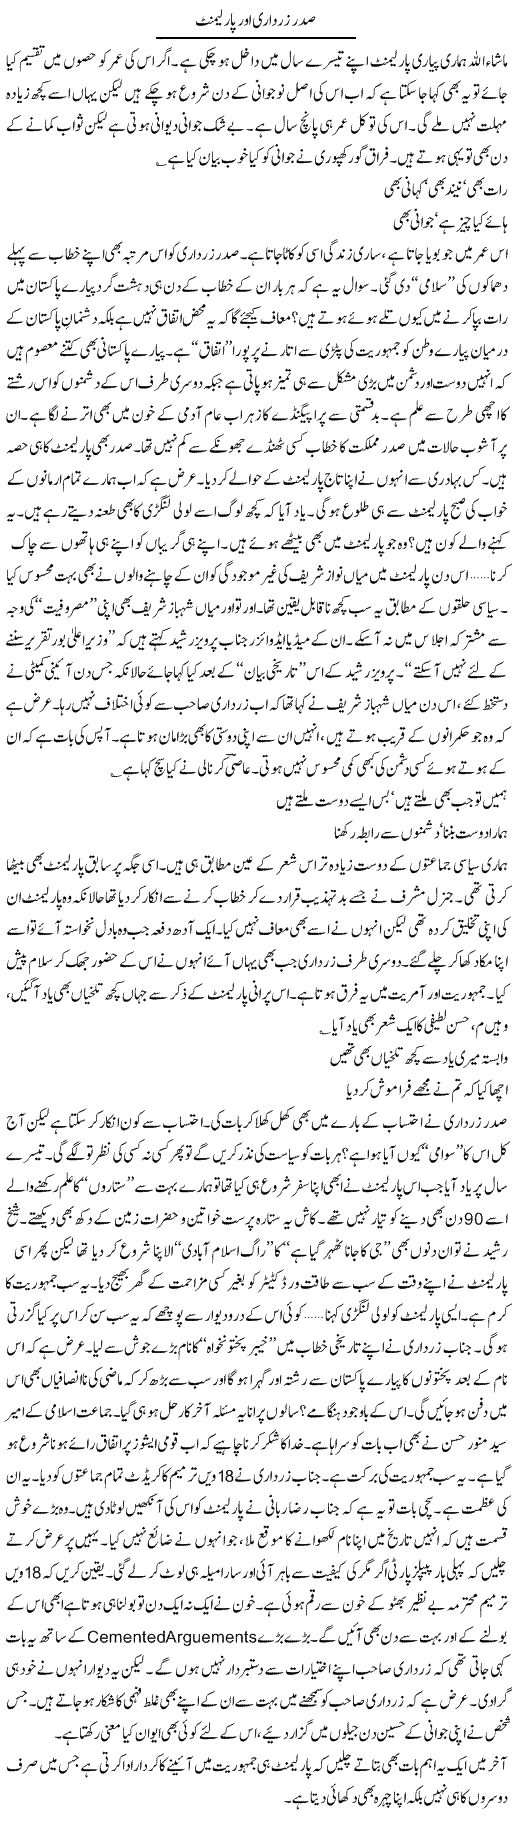 Zardari aur Parliament Express Column Ijaz Hafeez 12 April 2010